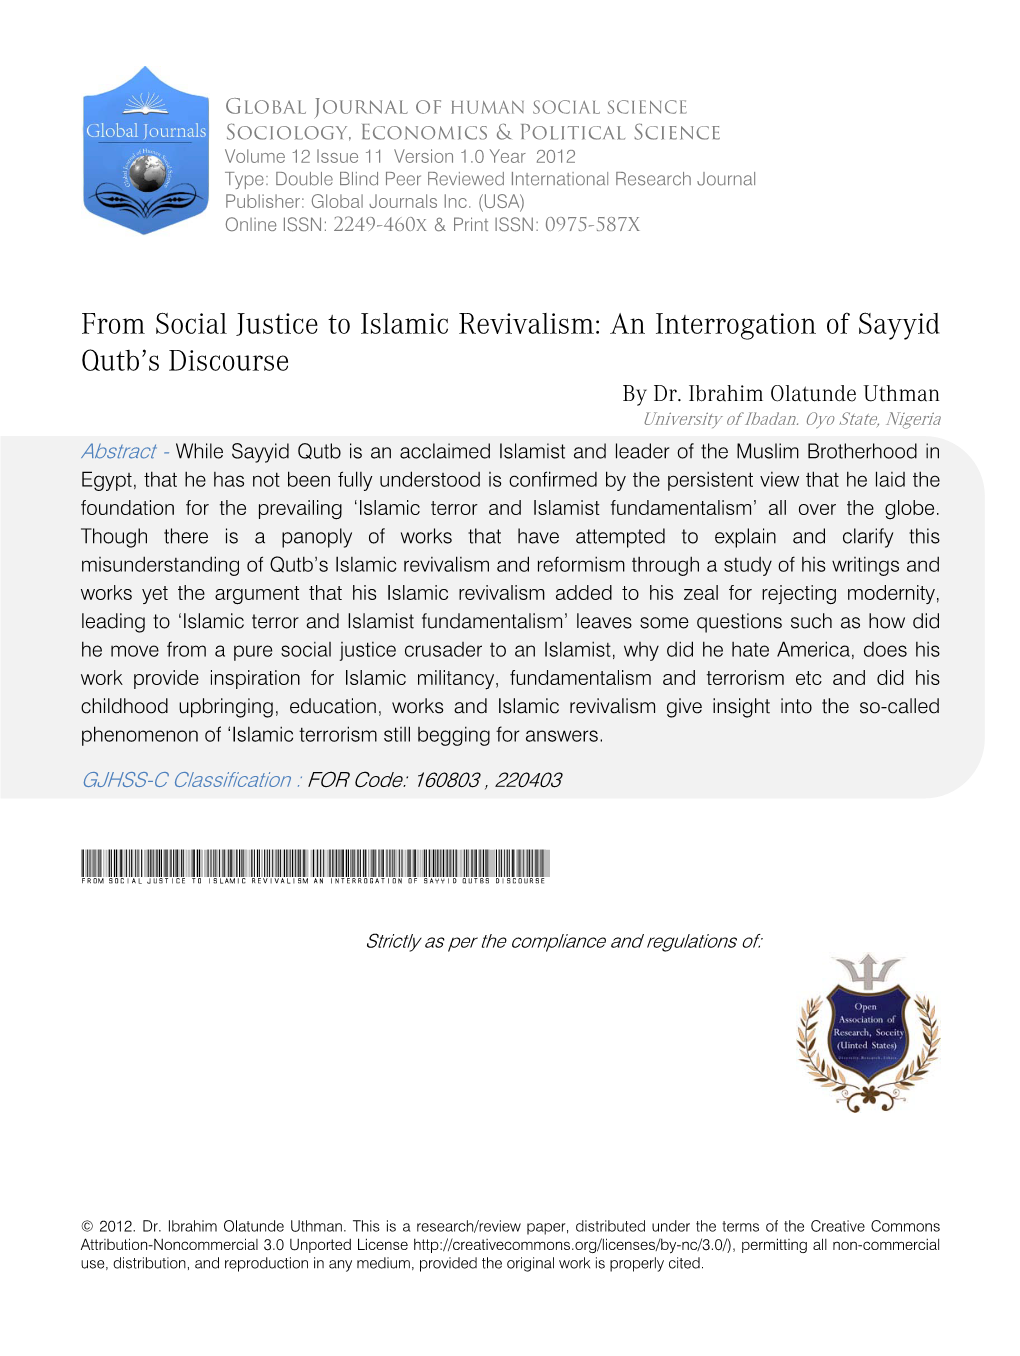 An Interrogation of Sayyid Qutb's Discourse